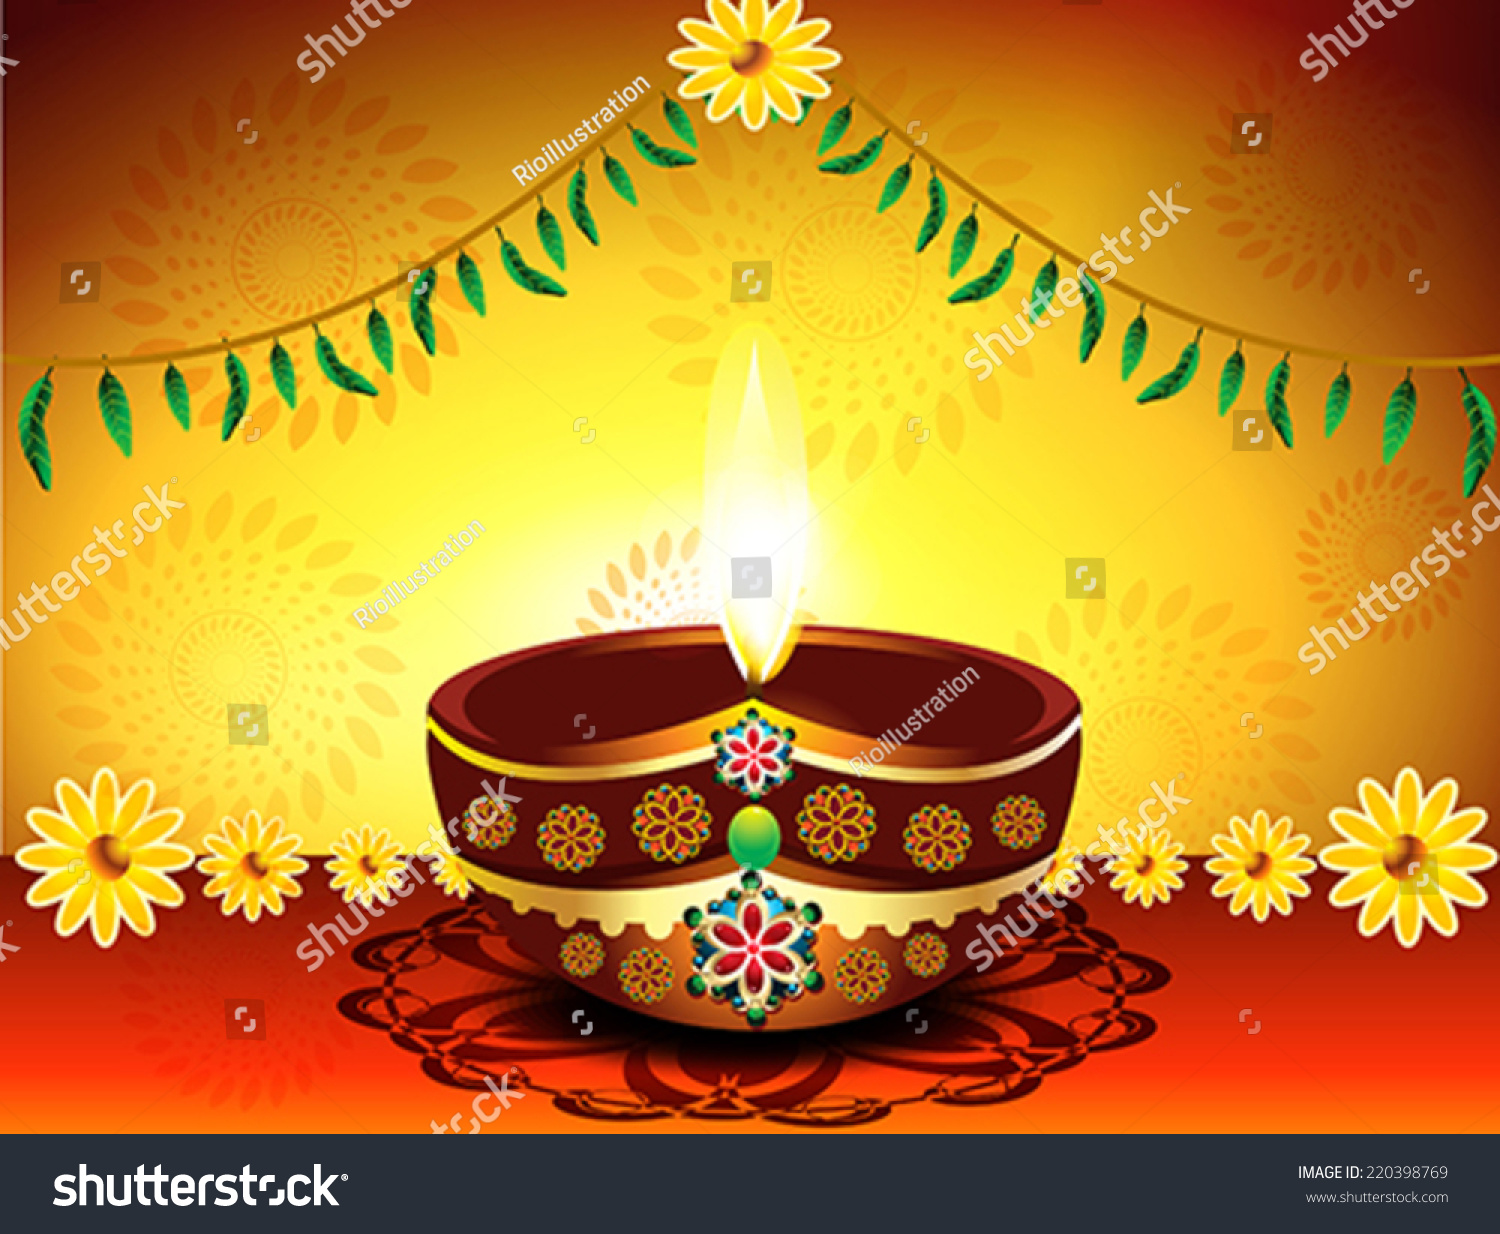 Abstract Diwali Festival Background Vector Illustration Stock